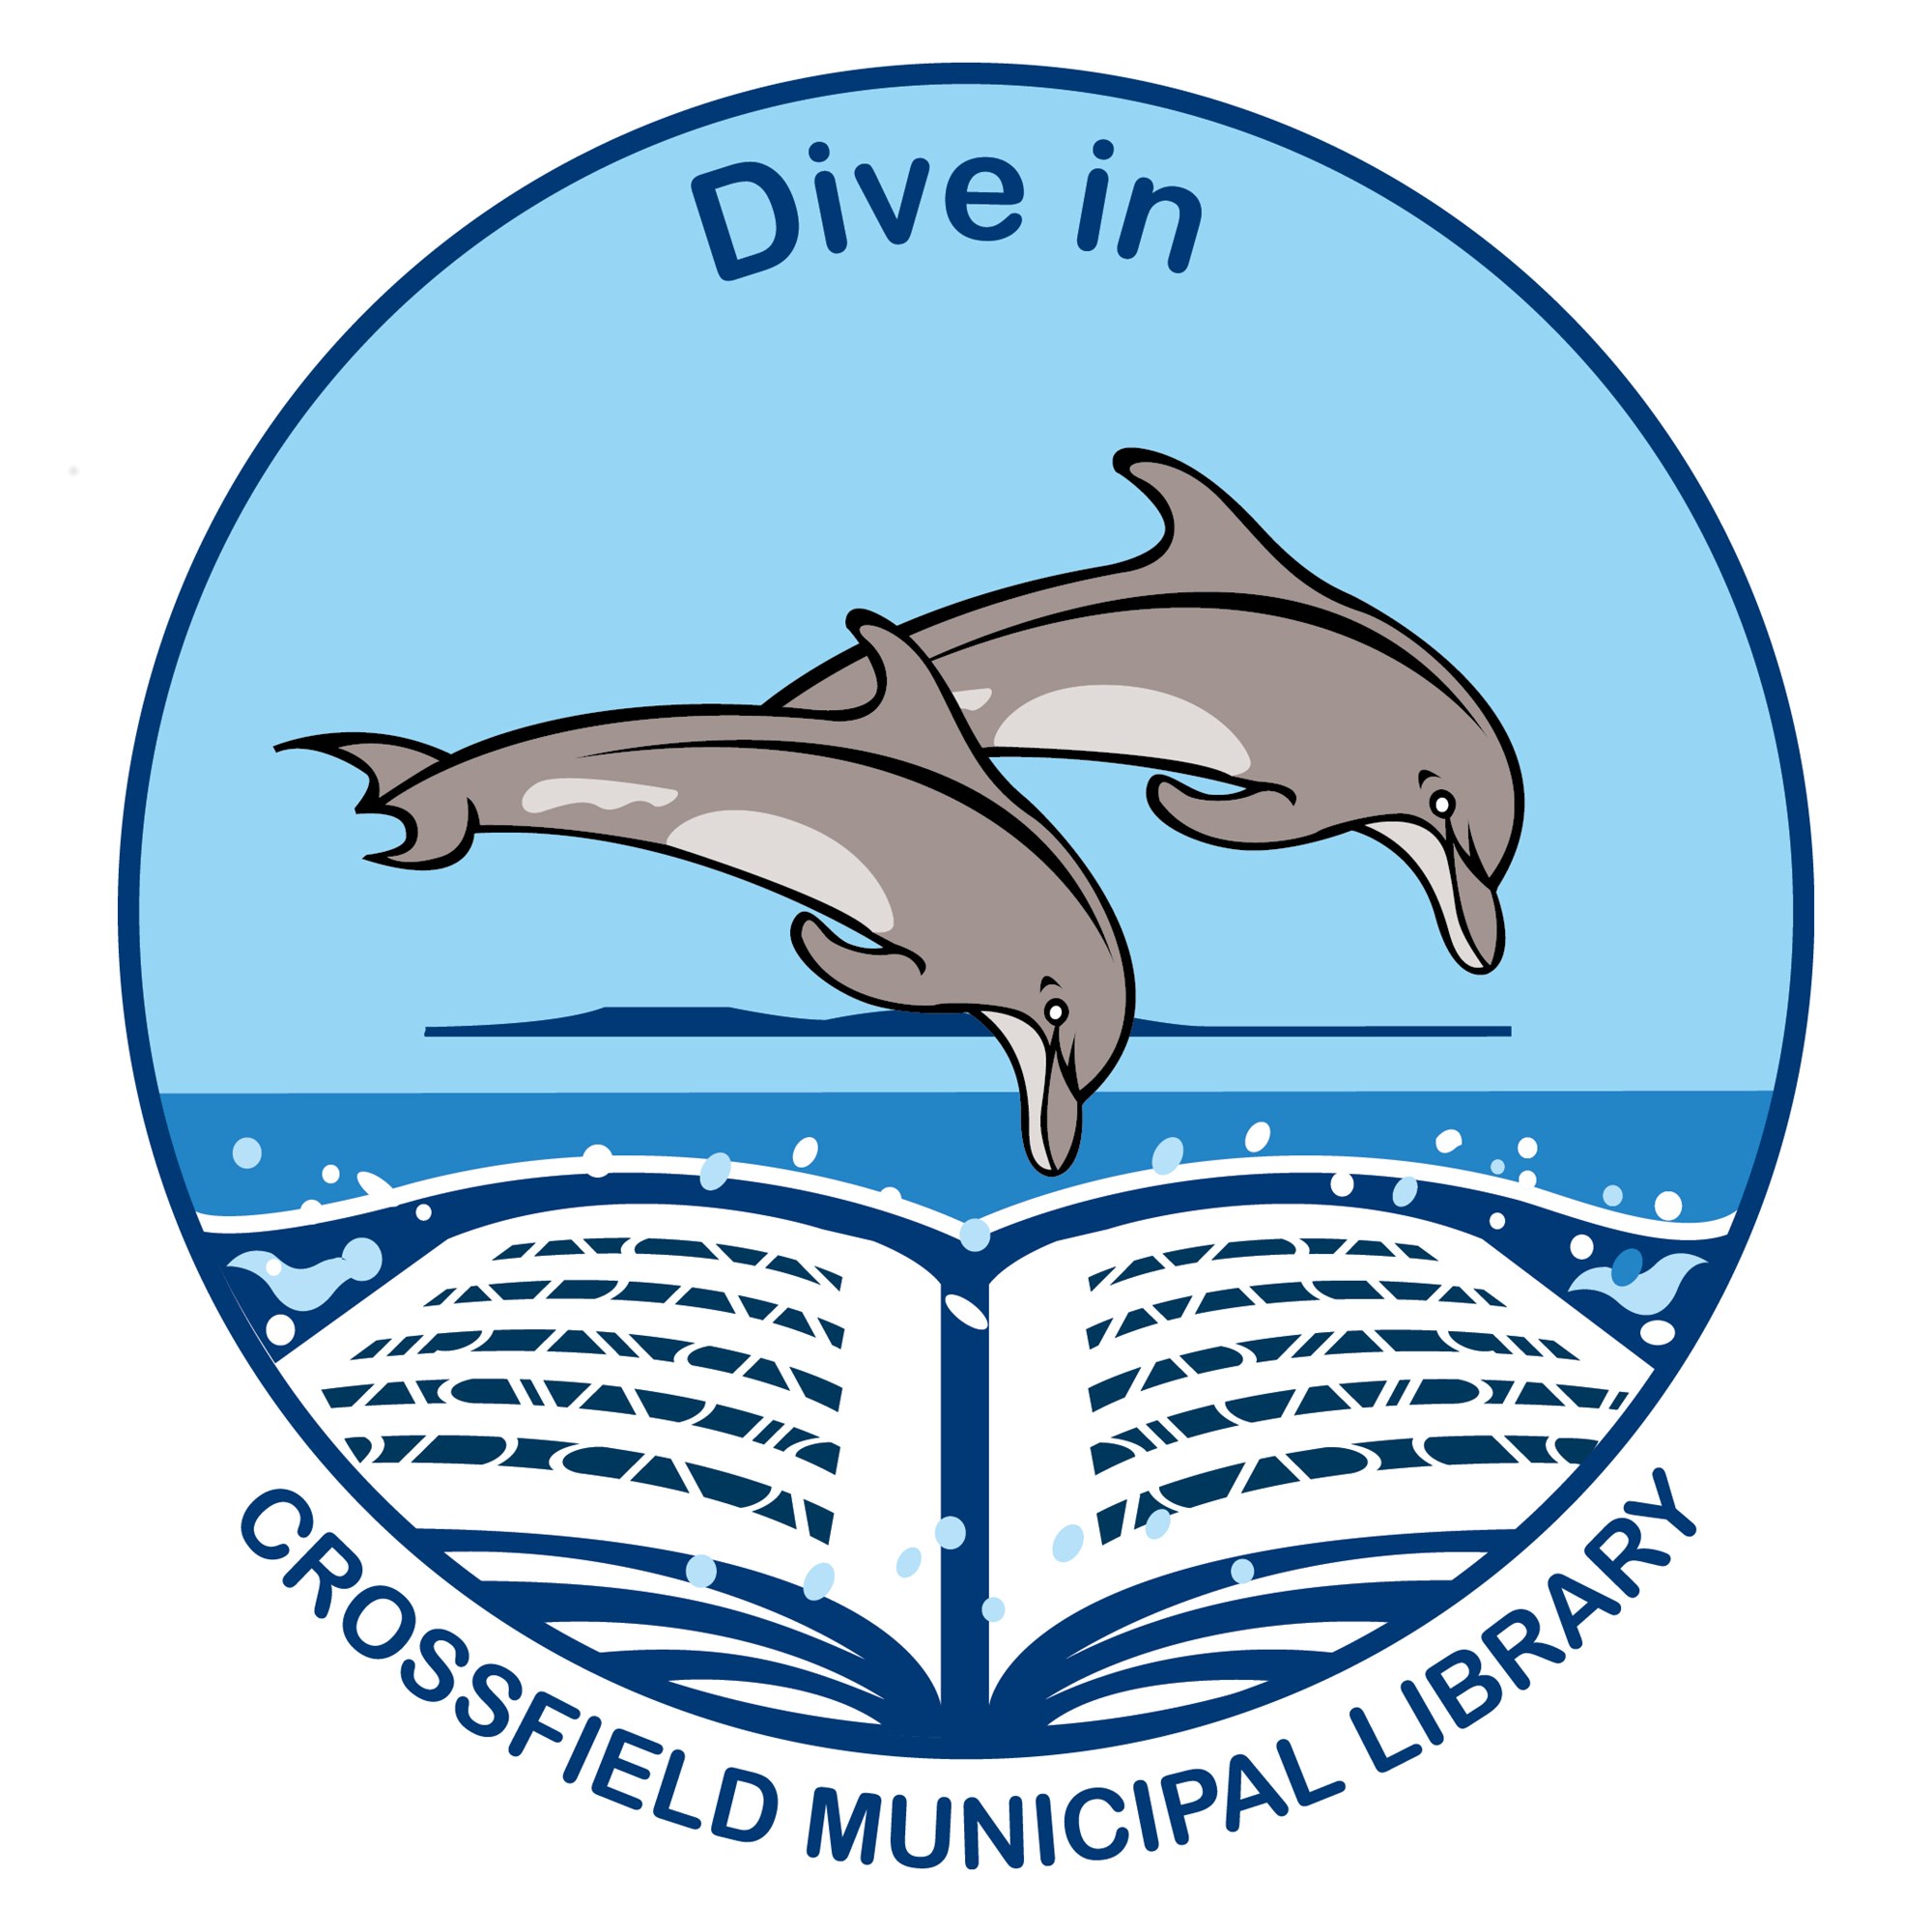 Crossfield Municipal Library